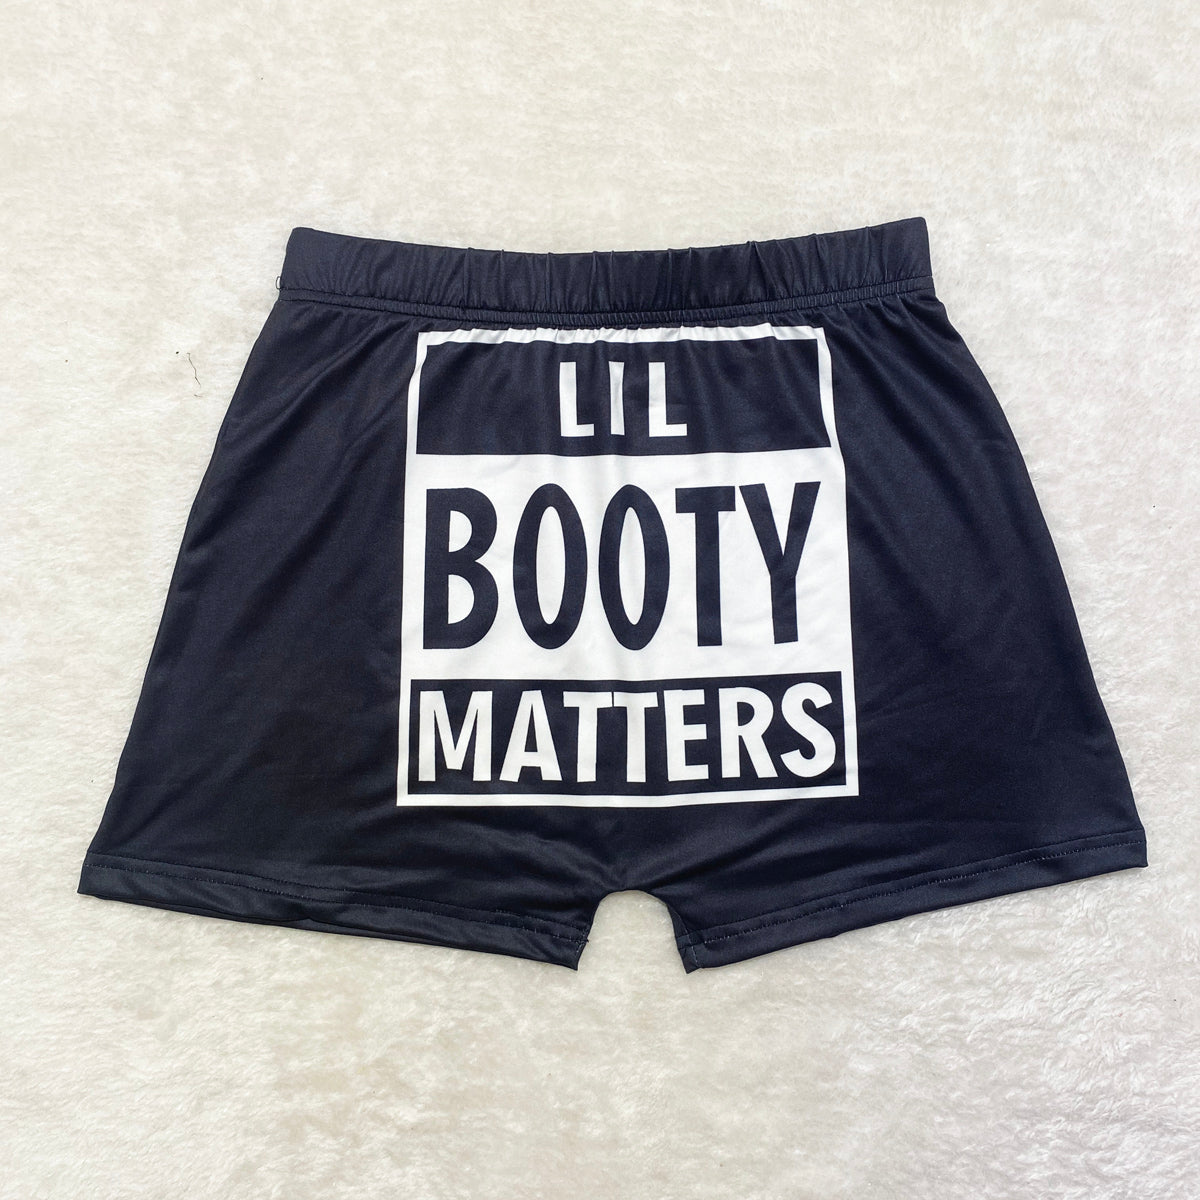 “Lil Booty Matter” Shorts